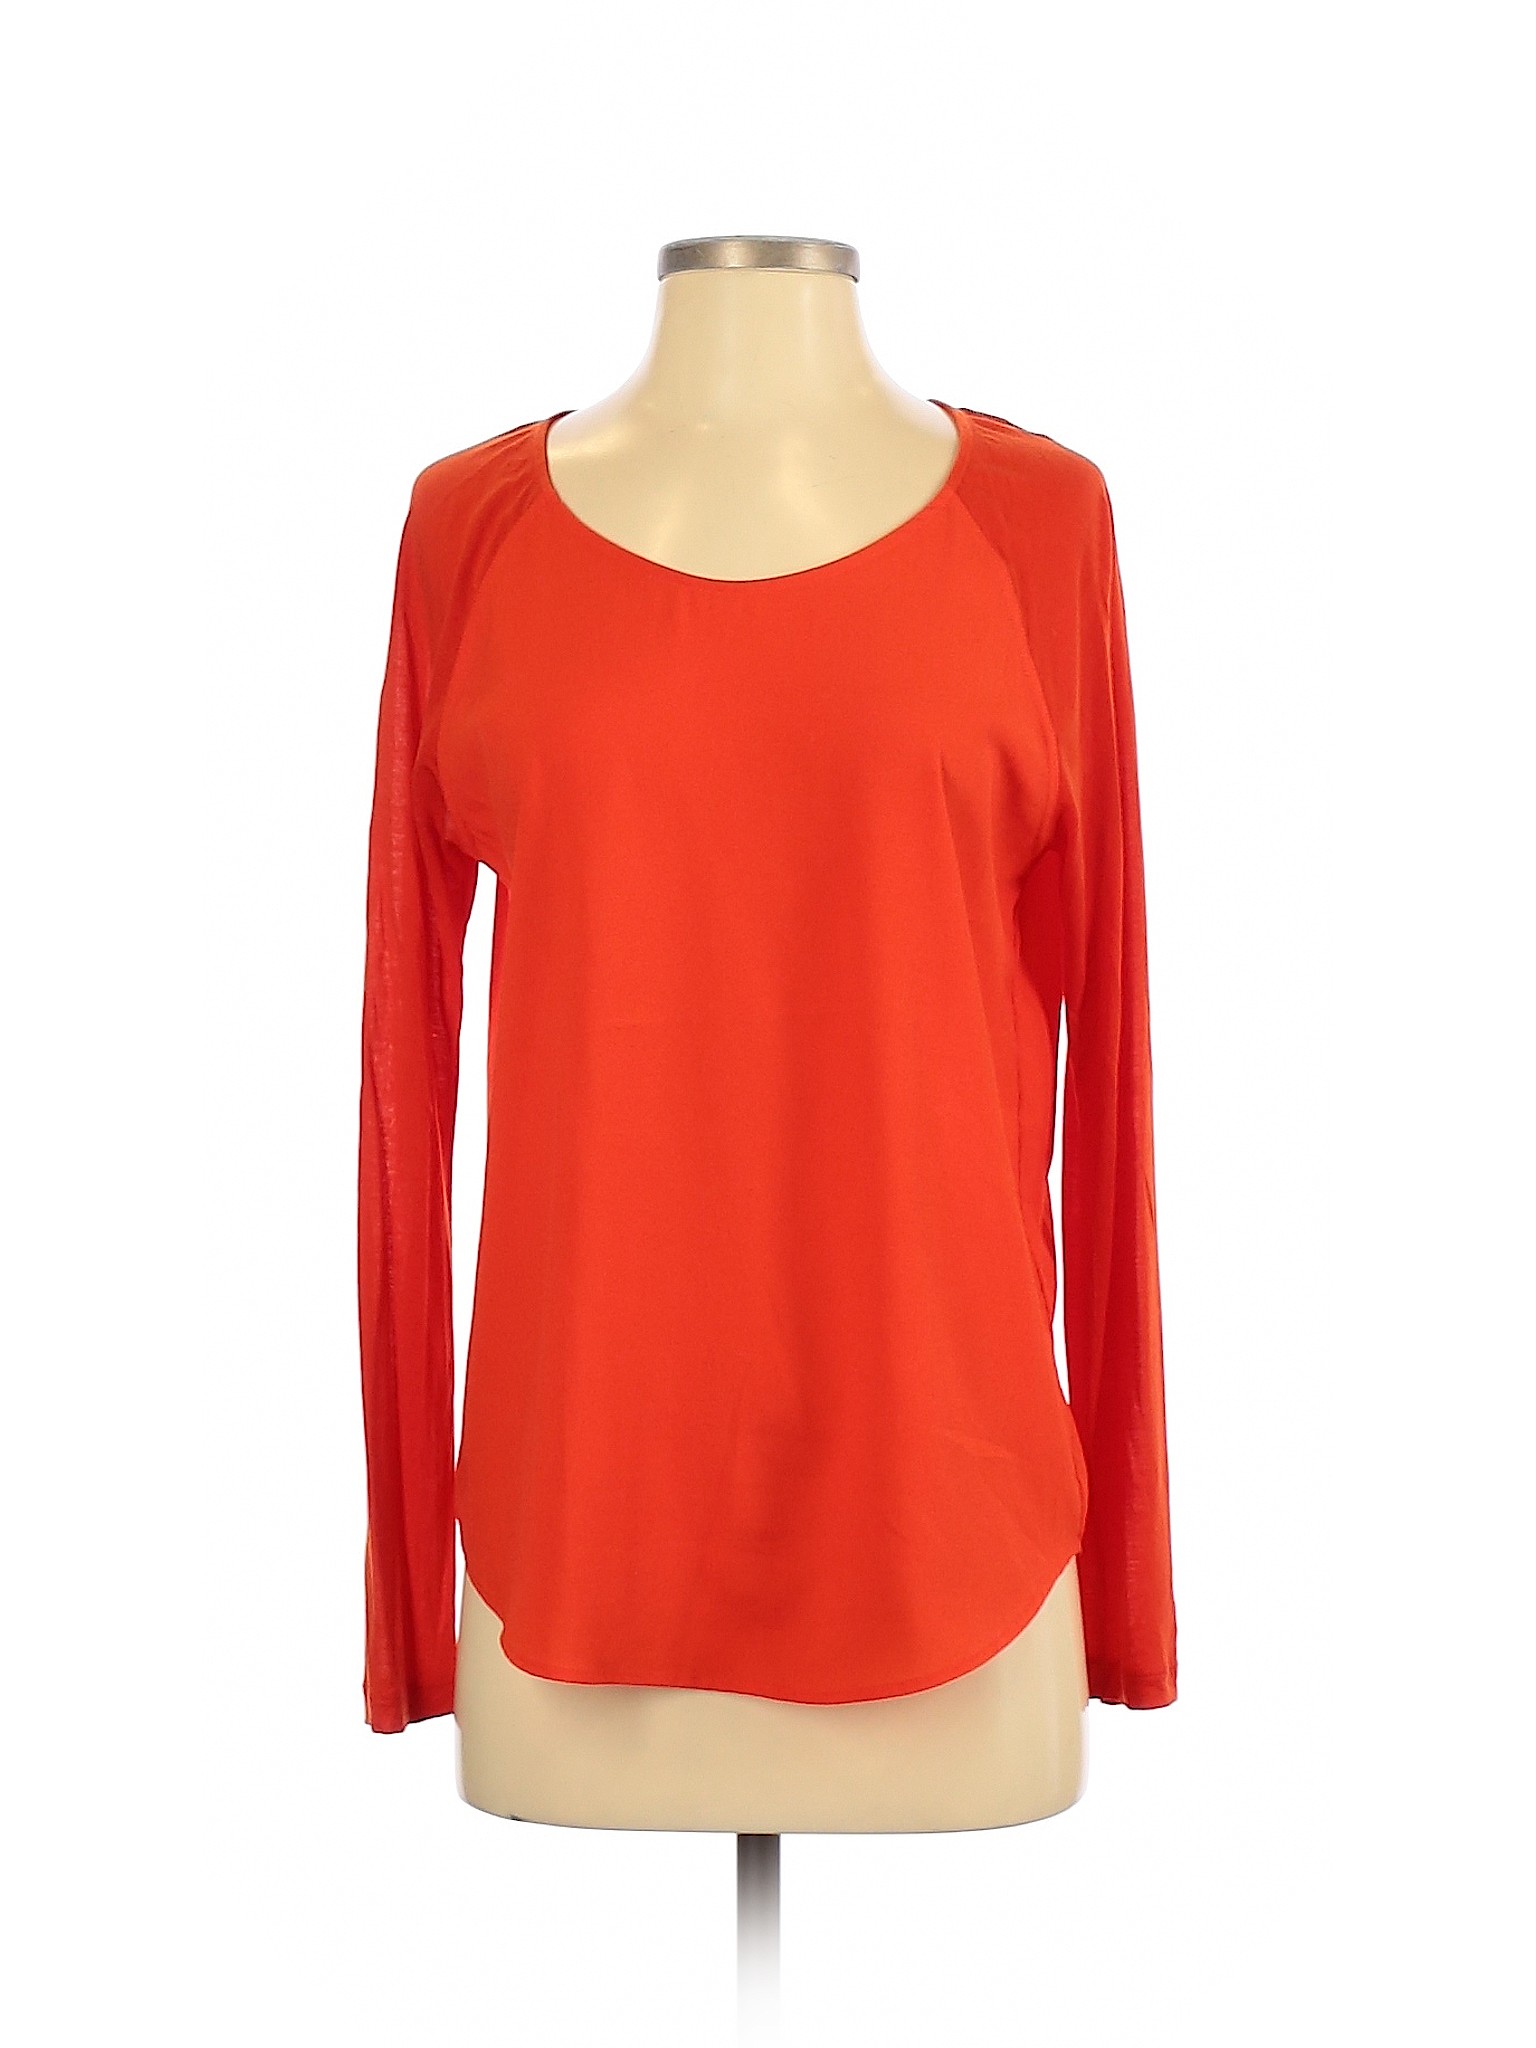 French Connection Women Orange Long Sleeve Top M | eBay